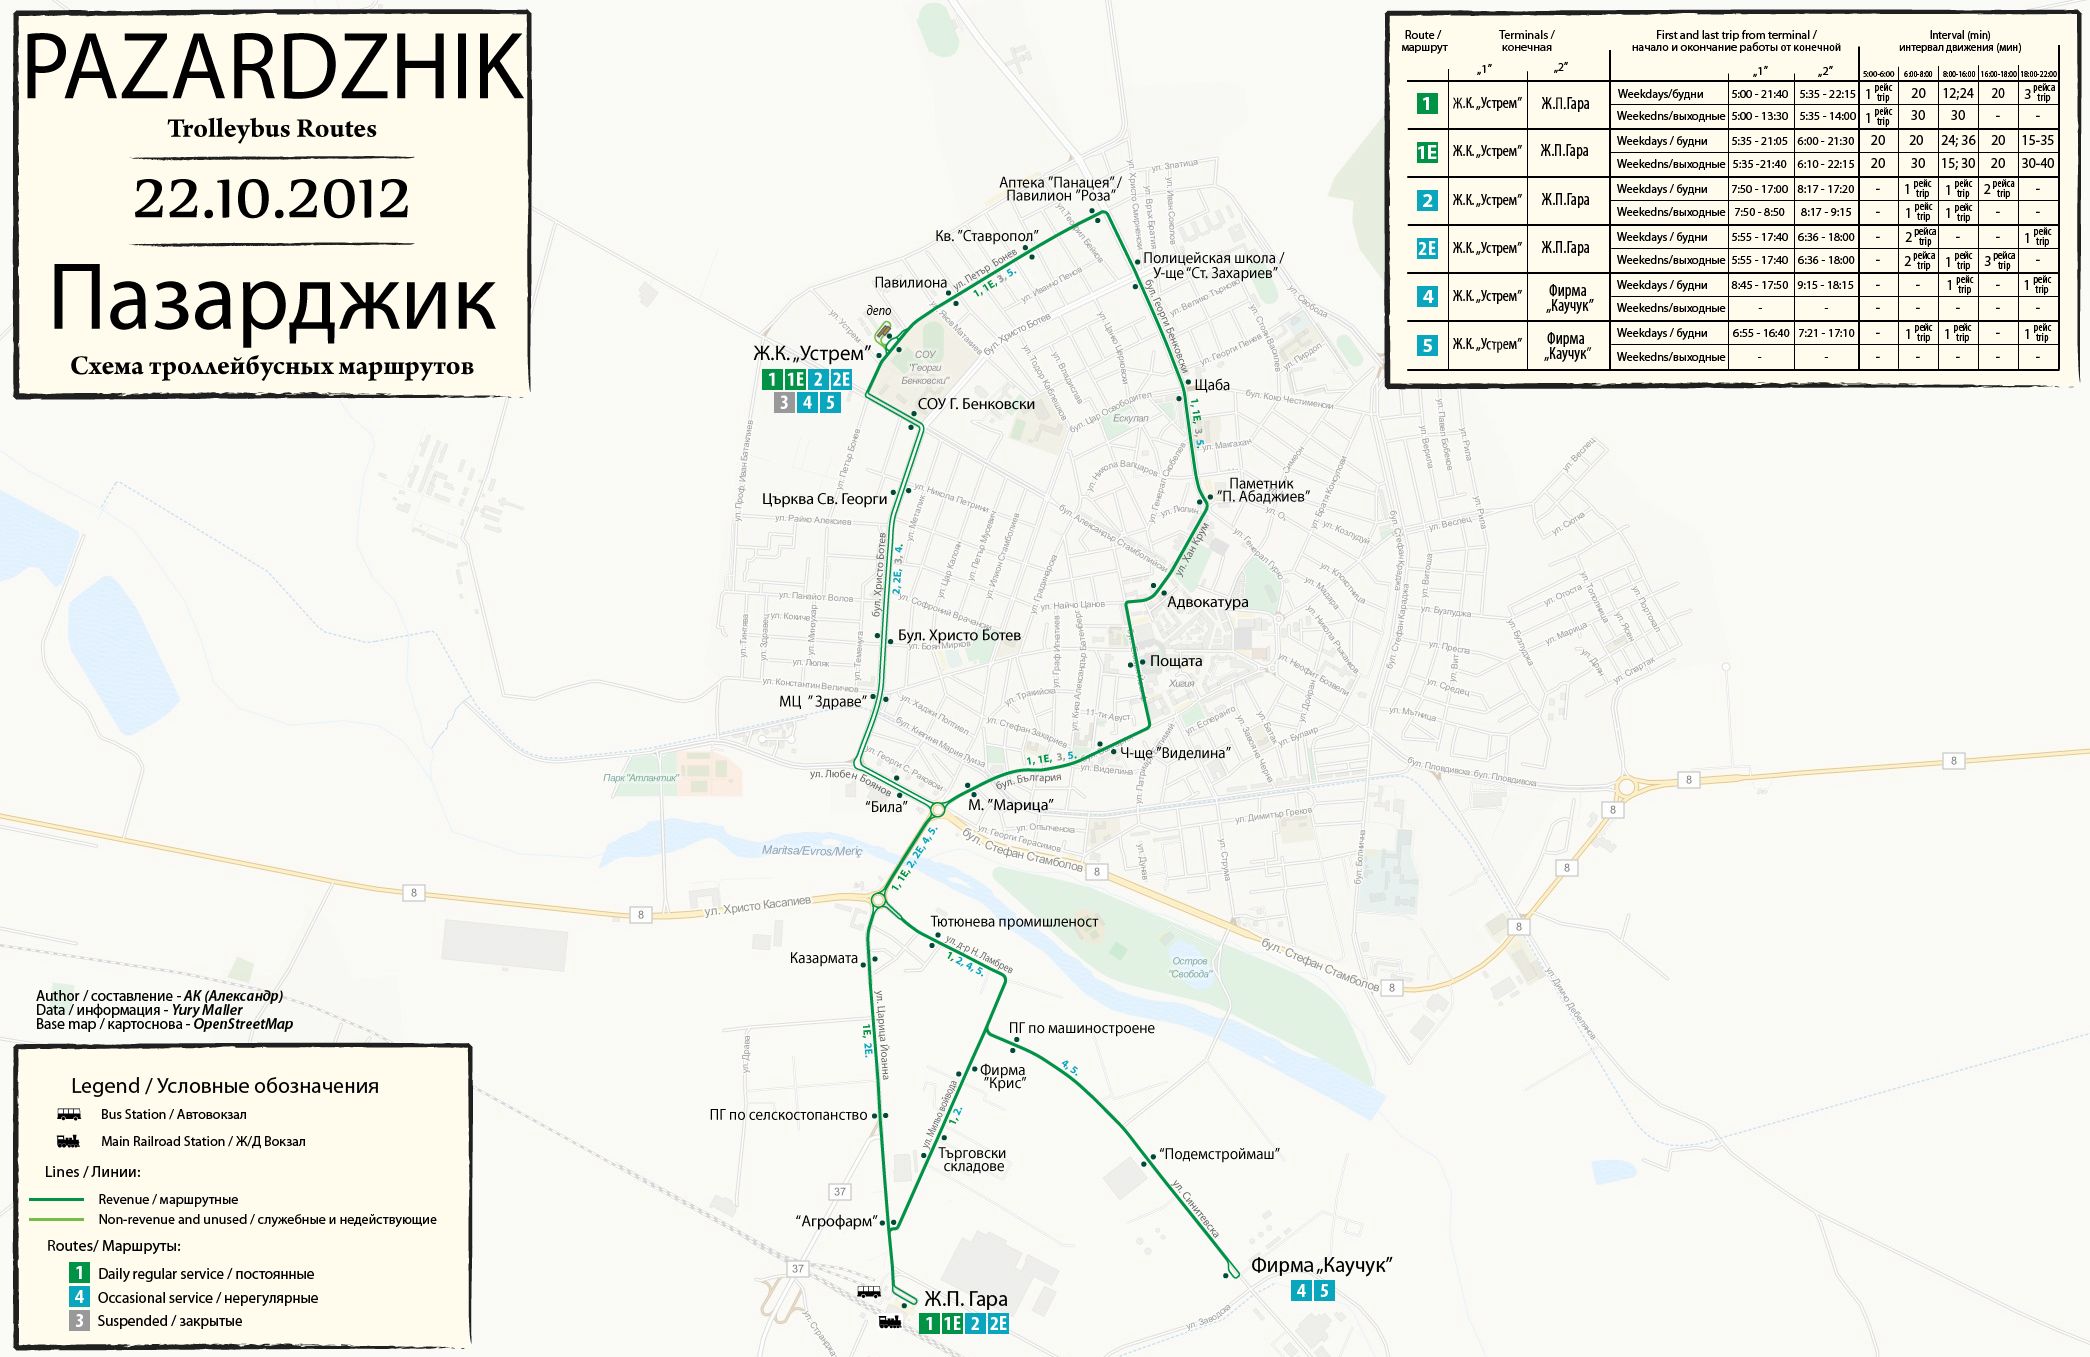 Pazardzhik — Maps